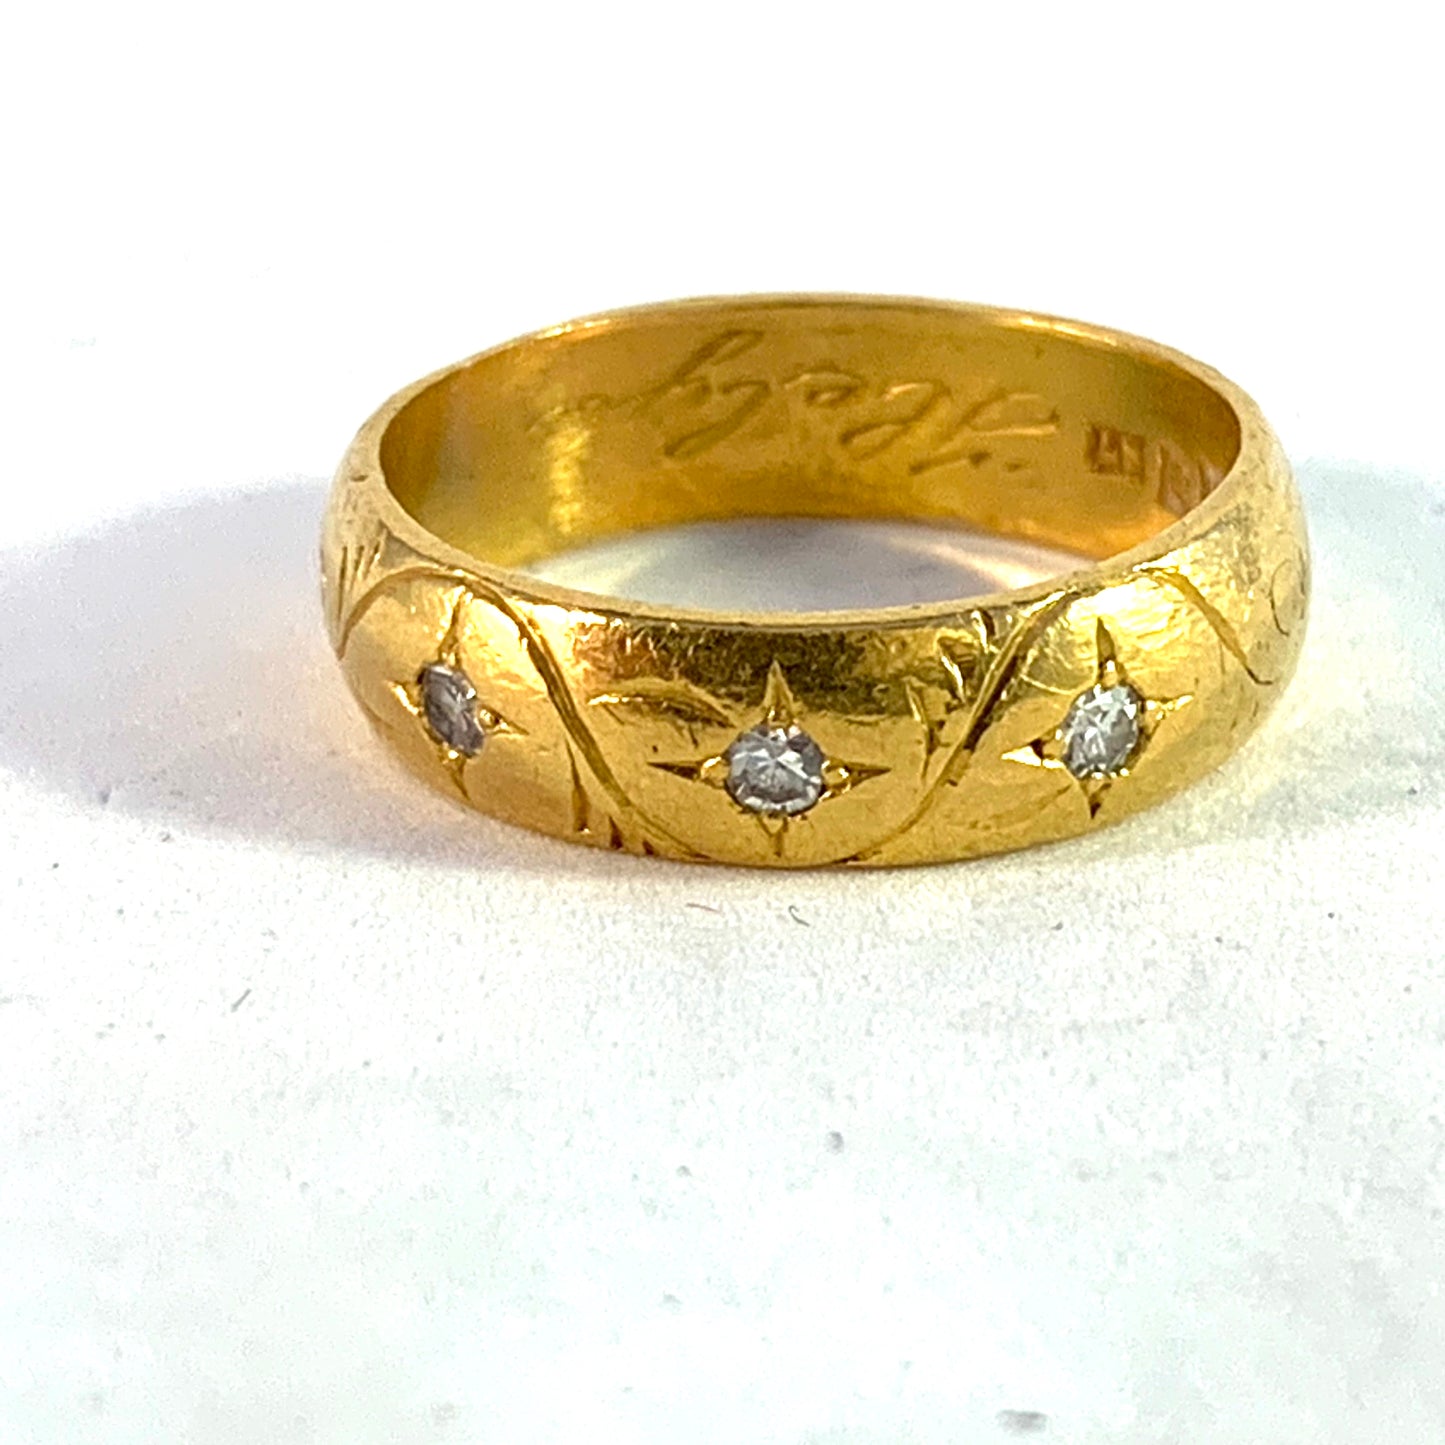 Markström, Sweden 1920 Antique 23k Gold Diamond Gypsy Ring.